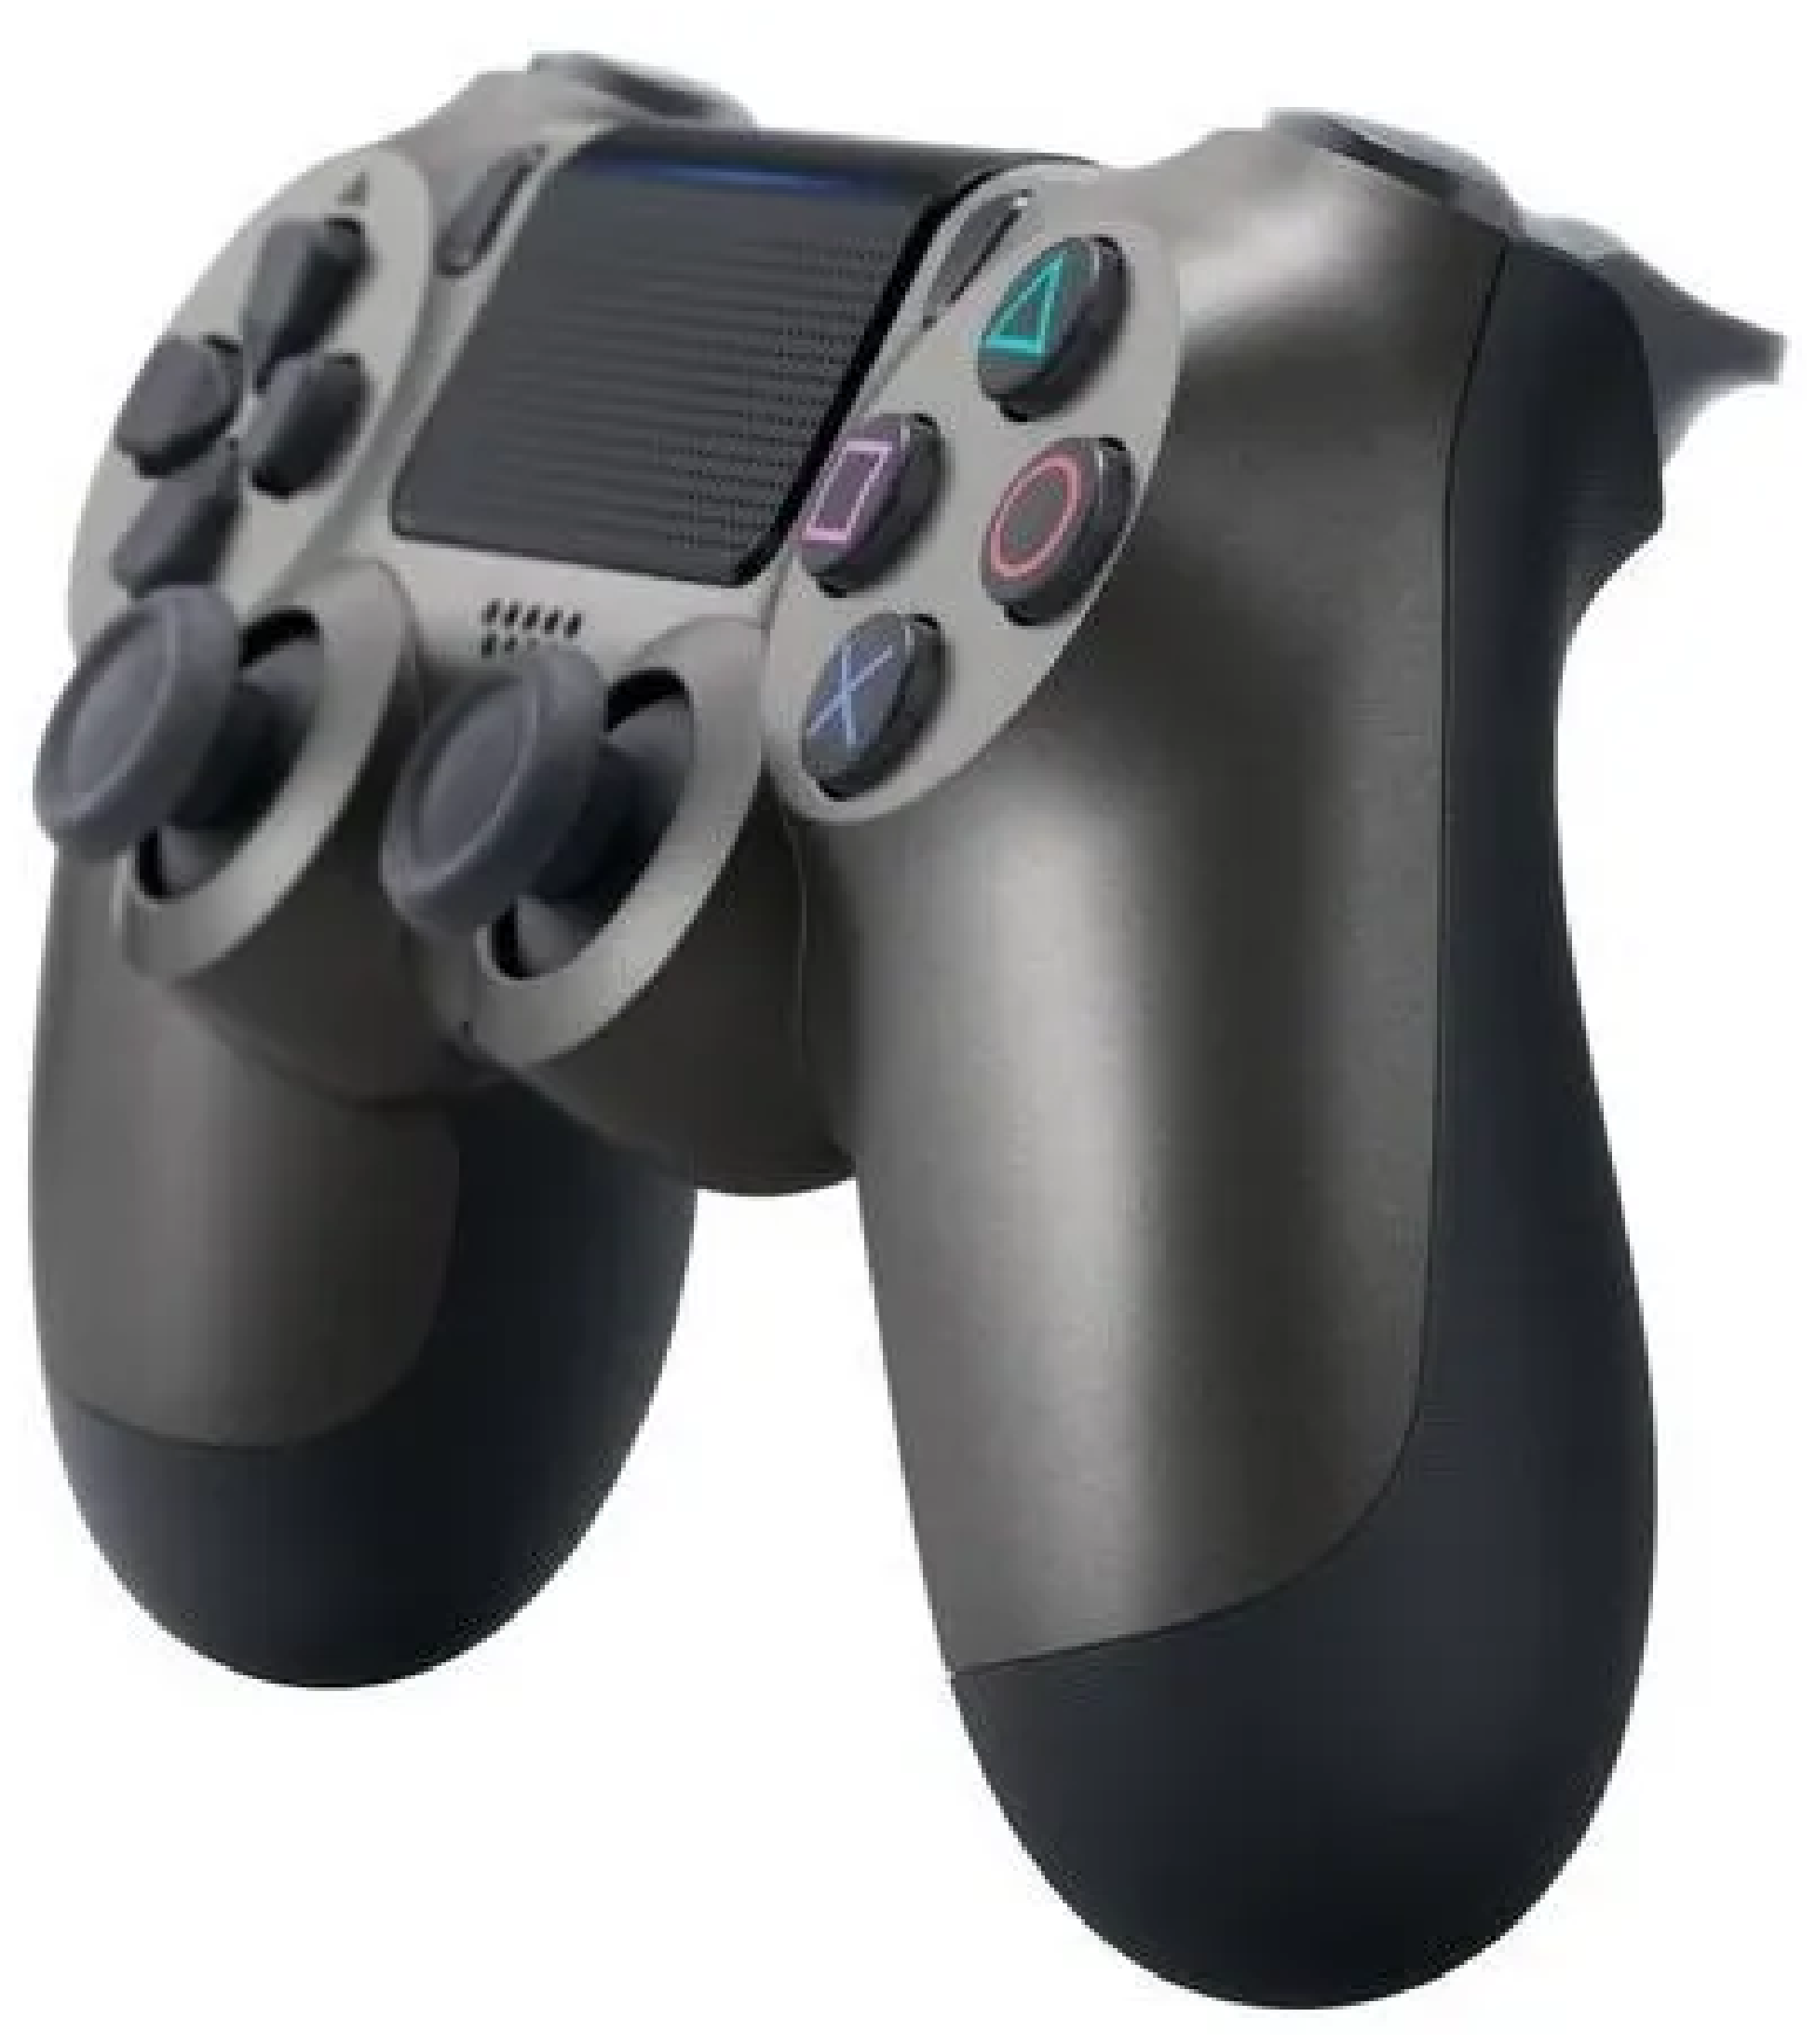 Геймпад-Джойстик для Playstation 4 беспроводной Wireless Controller / Блютуз контроллер PS4 (серый металлик)